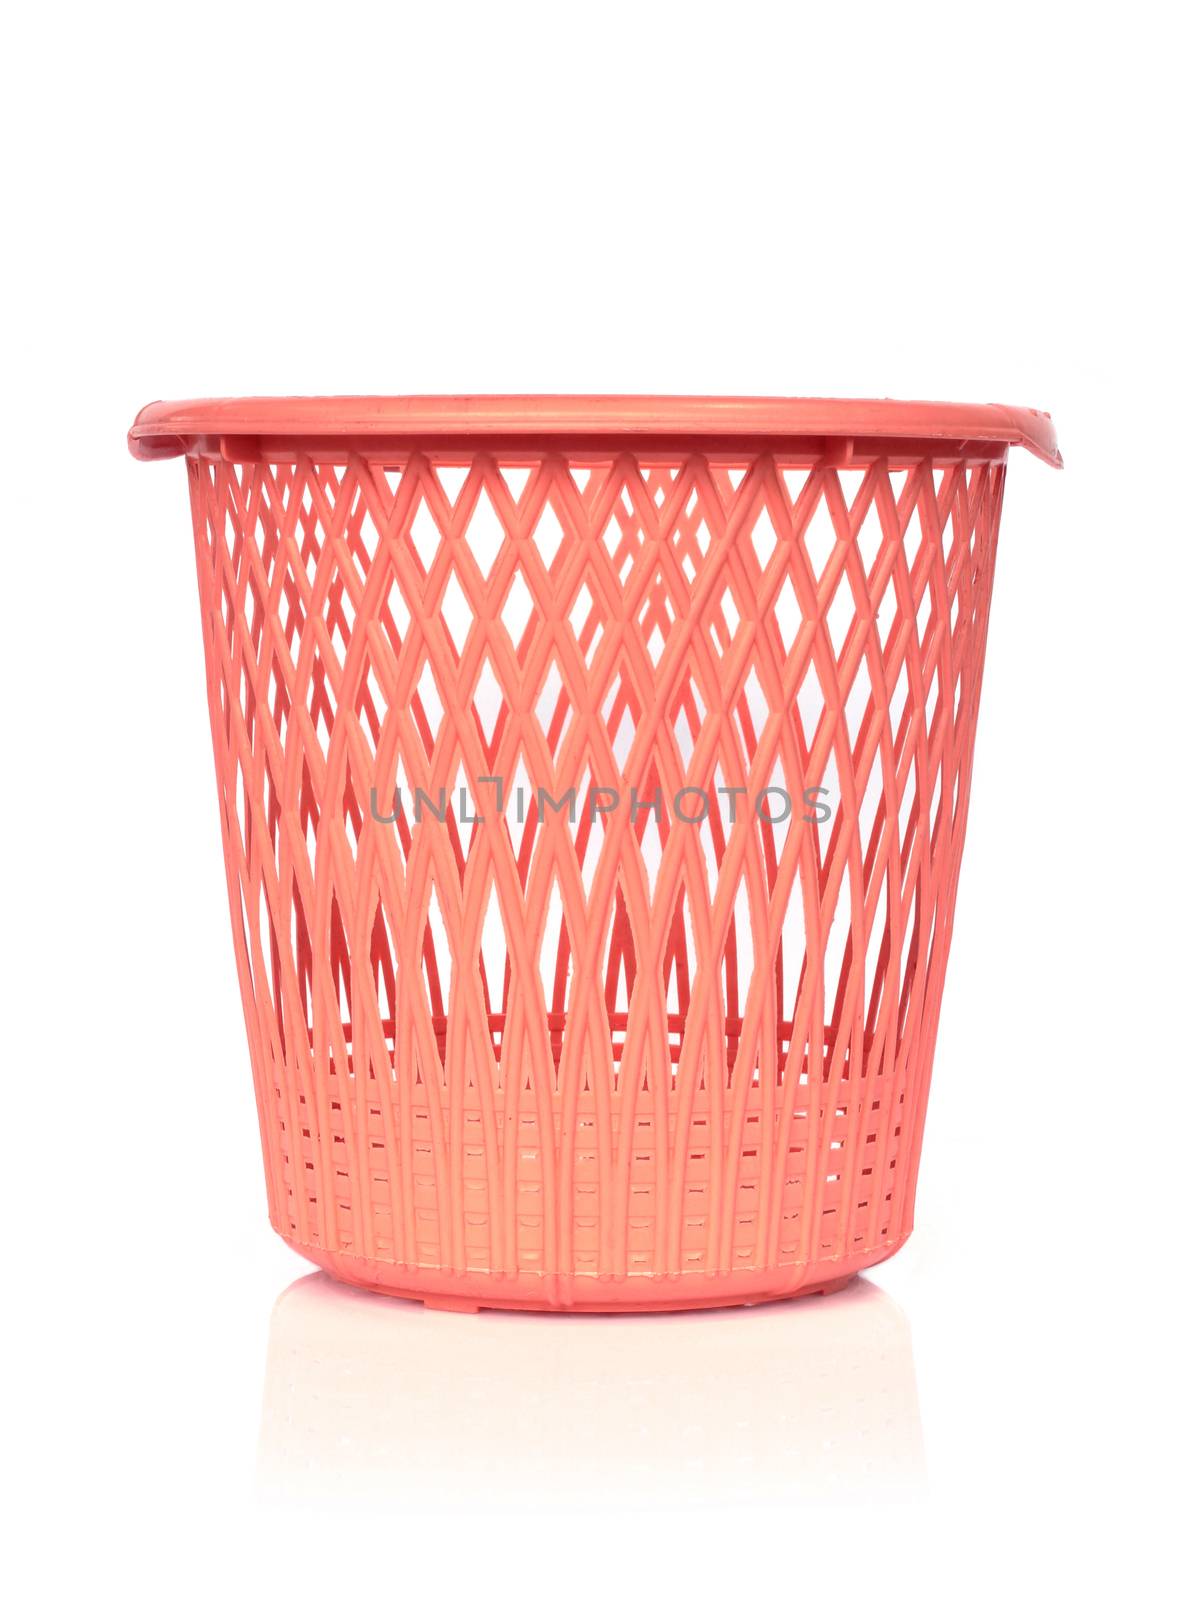 Image of plastic basket on white background by yod67